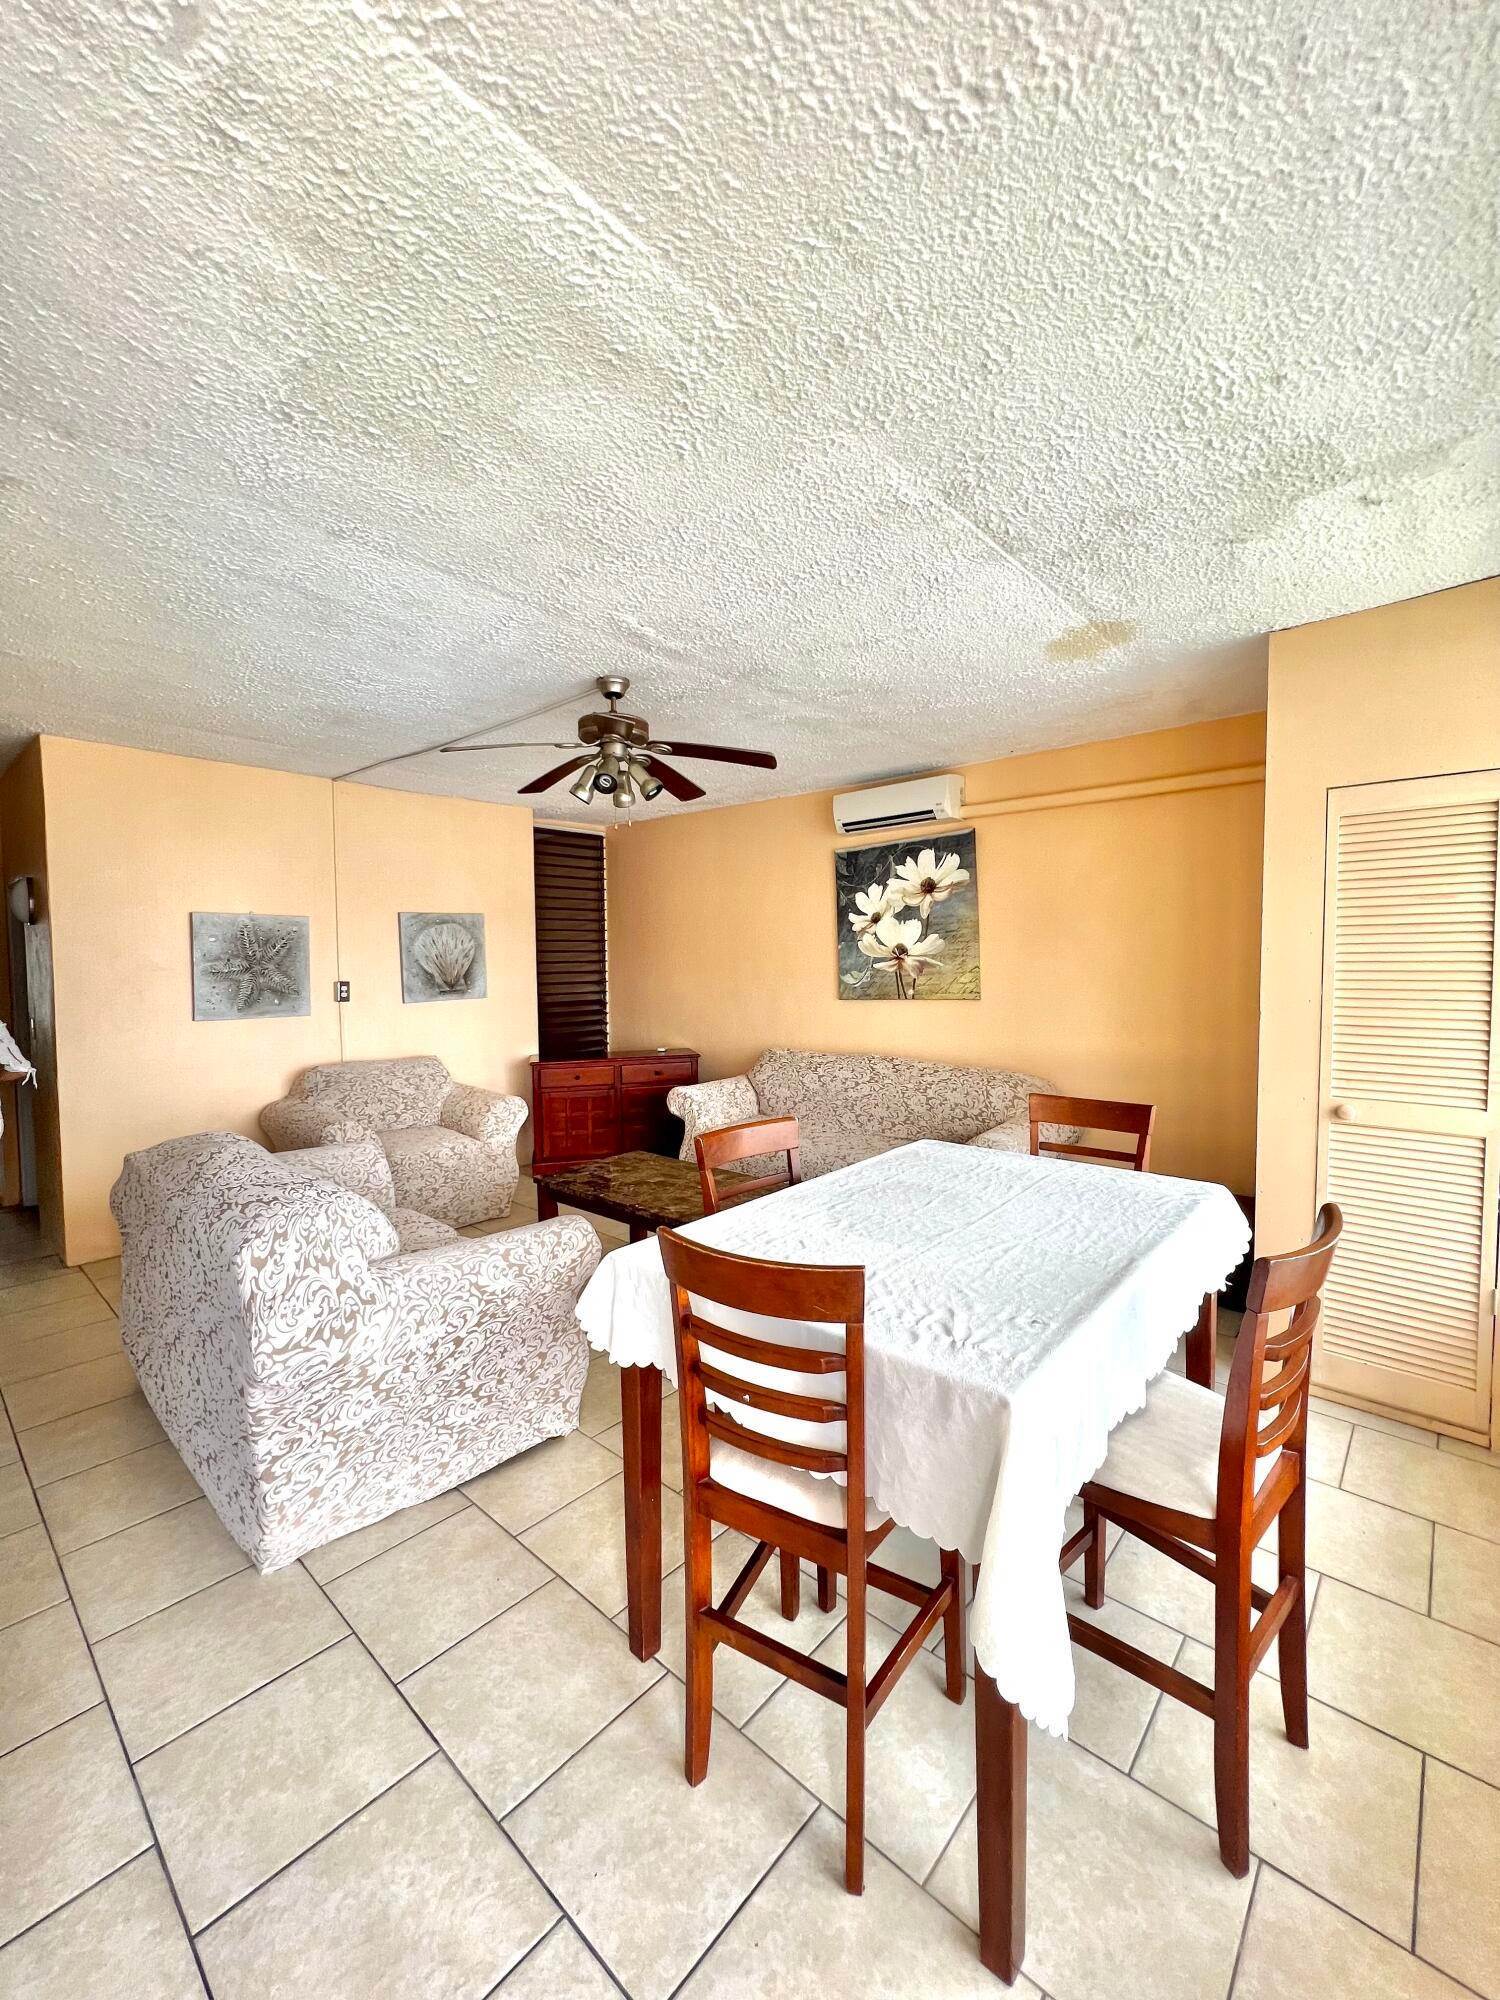 2. Condominiums at Bay Garden 37 Orange Grove CO St Croix, Virgin Islands 00820 United States Virgin Islands